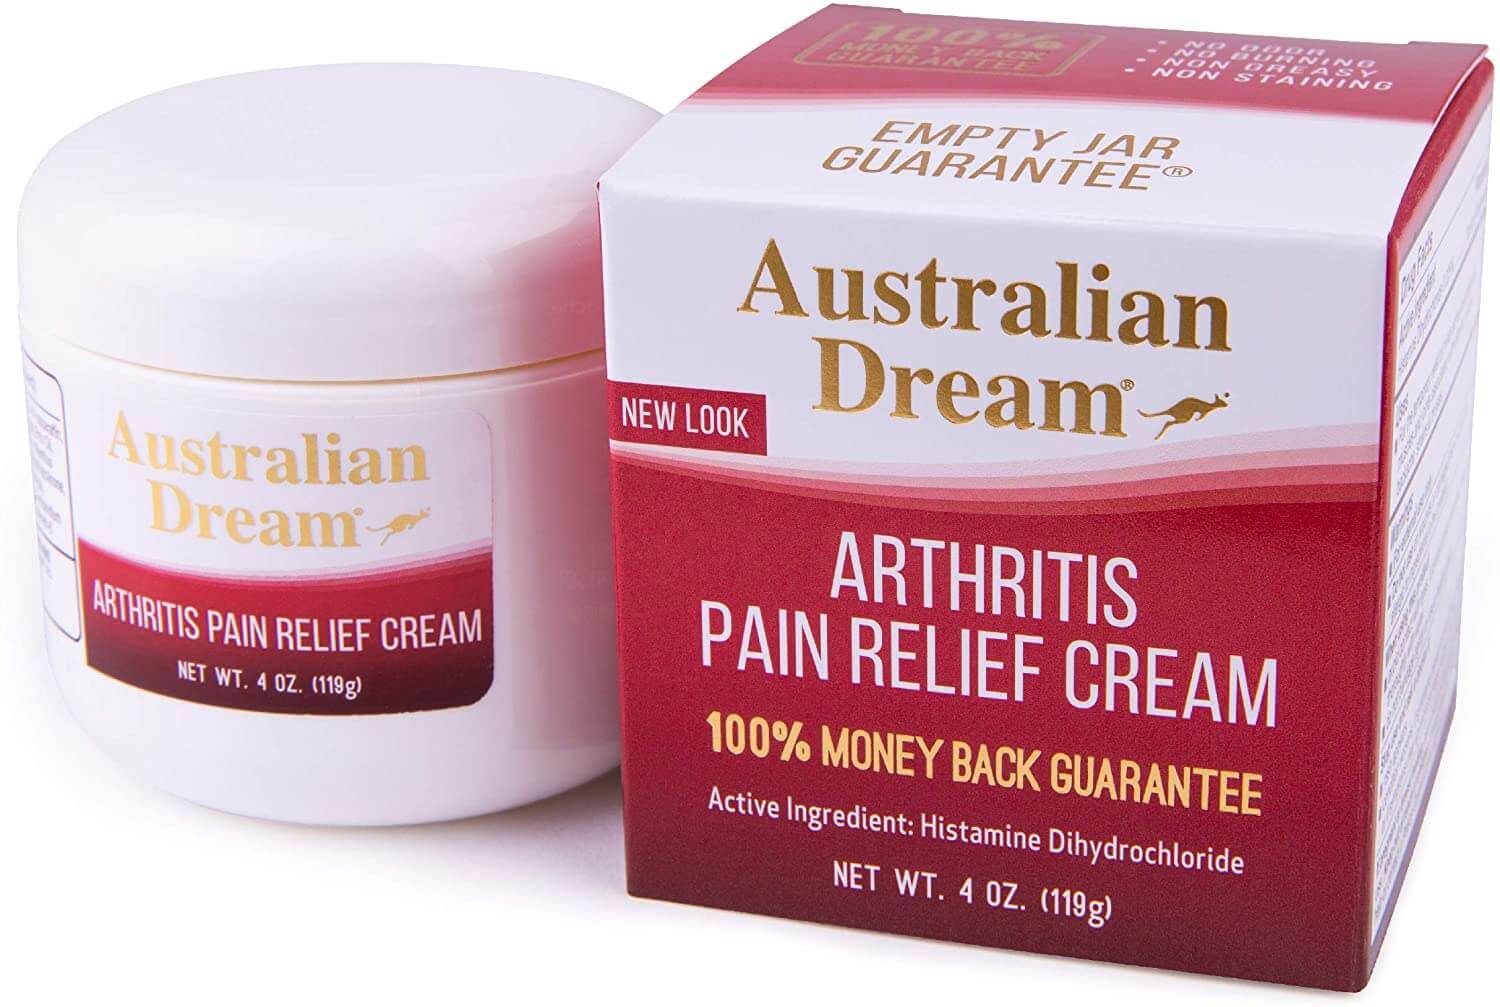 Australian Dream Arthritis Pain Relief Cream Review